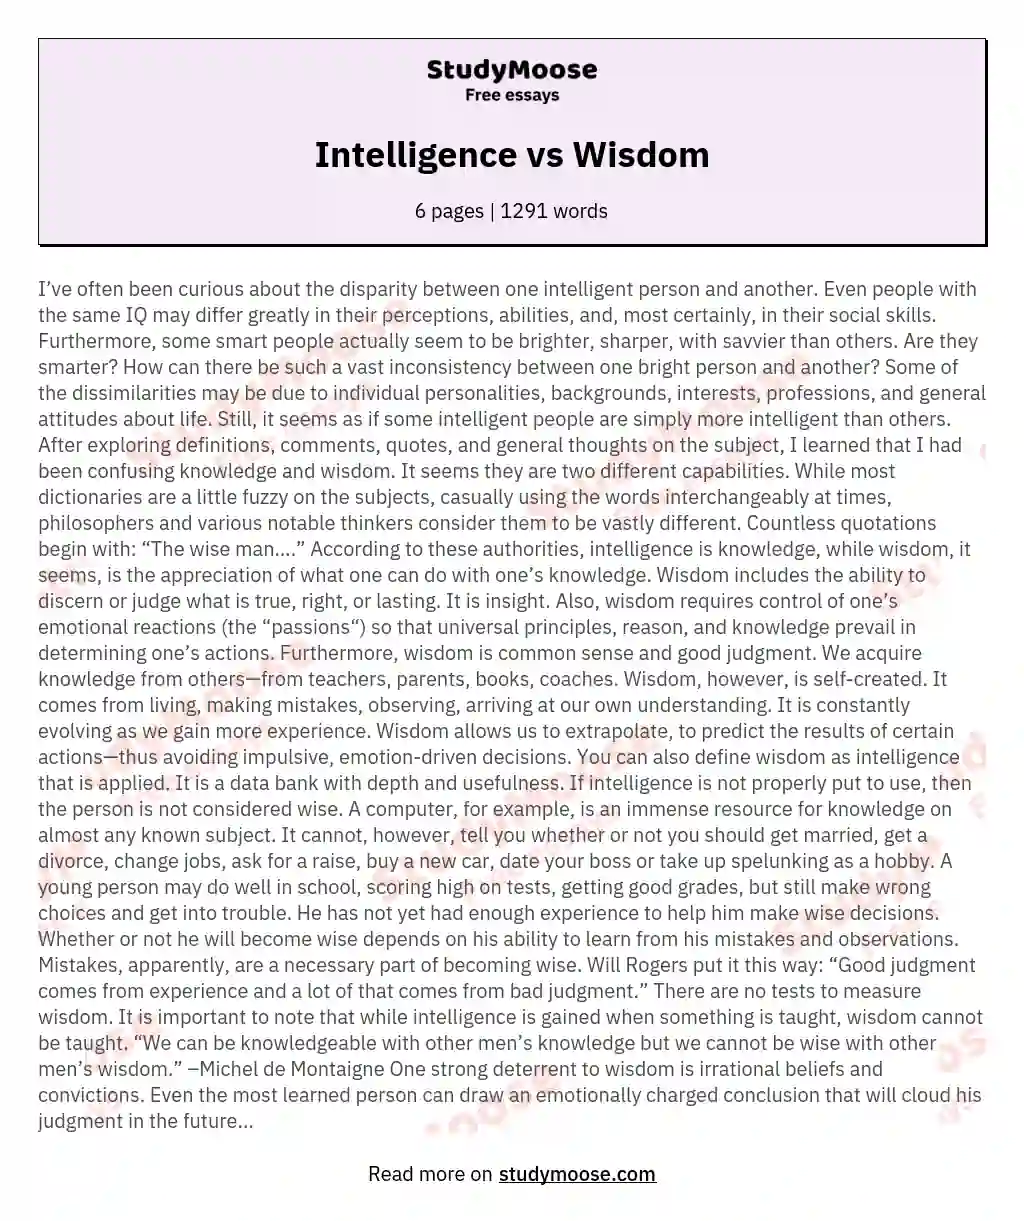 Intelligence vs Wisdom essay